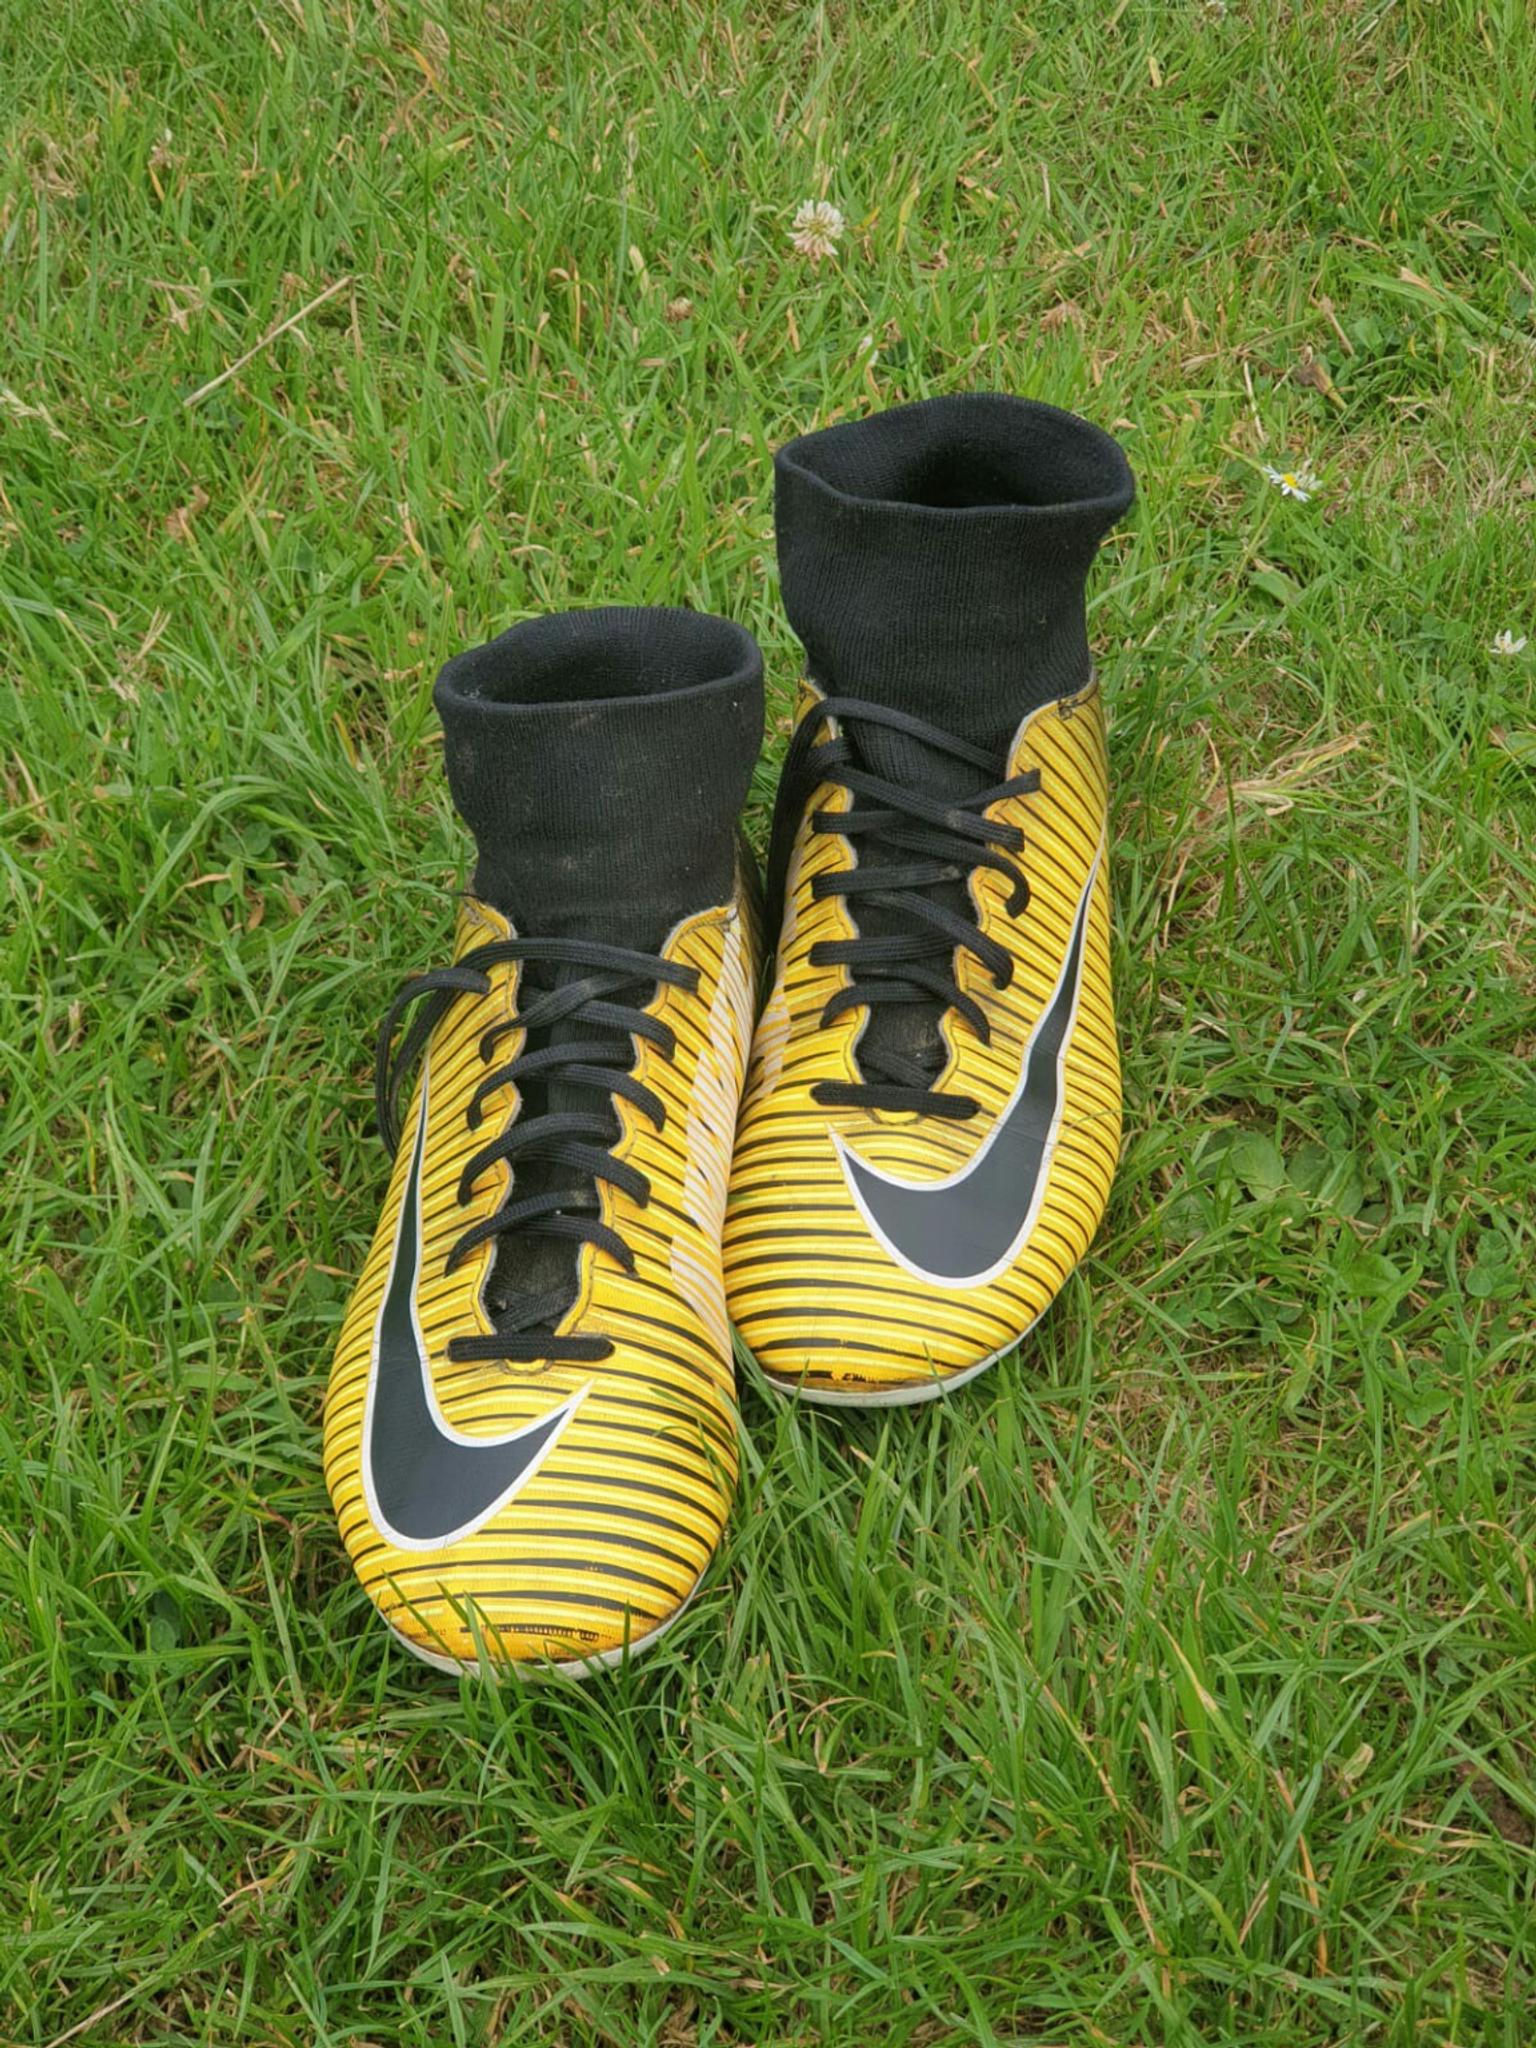 very boys football boots